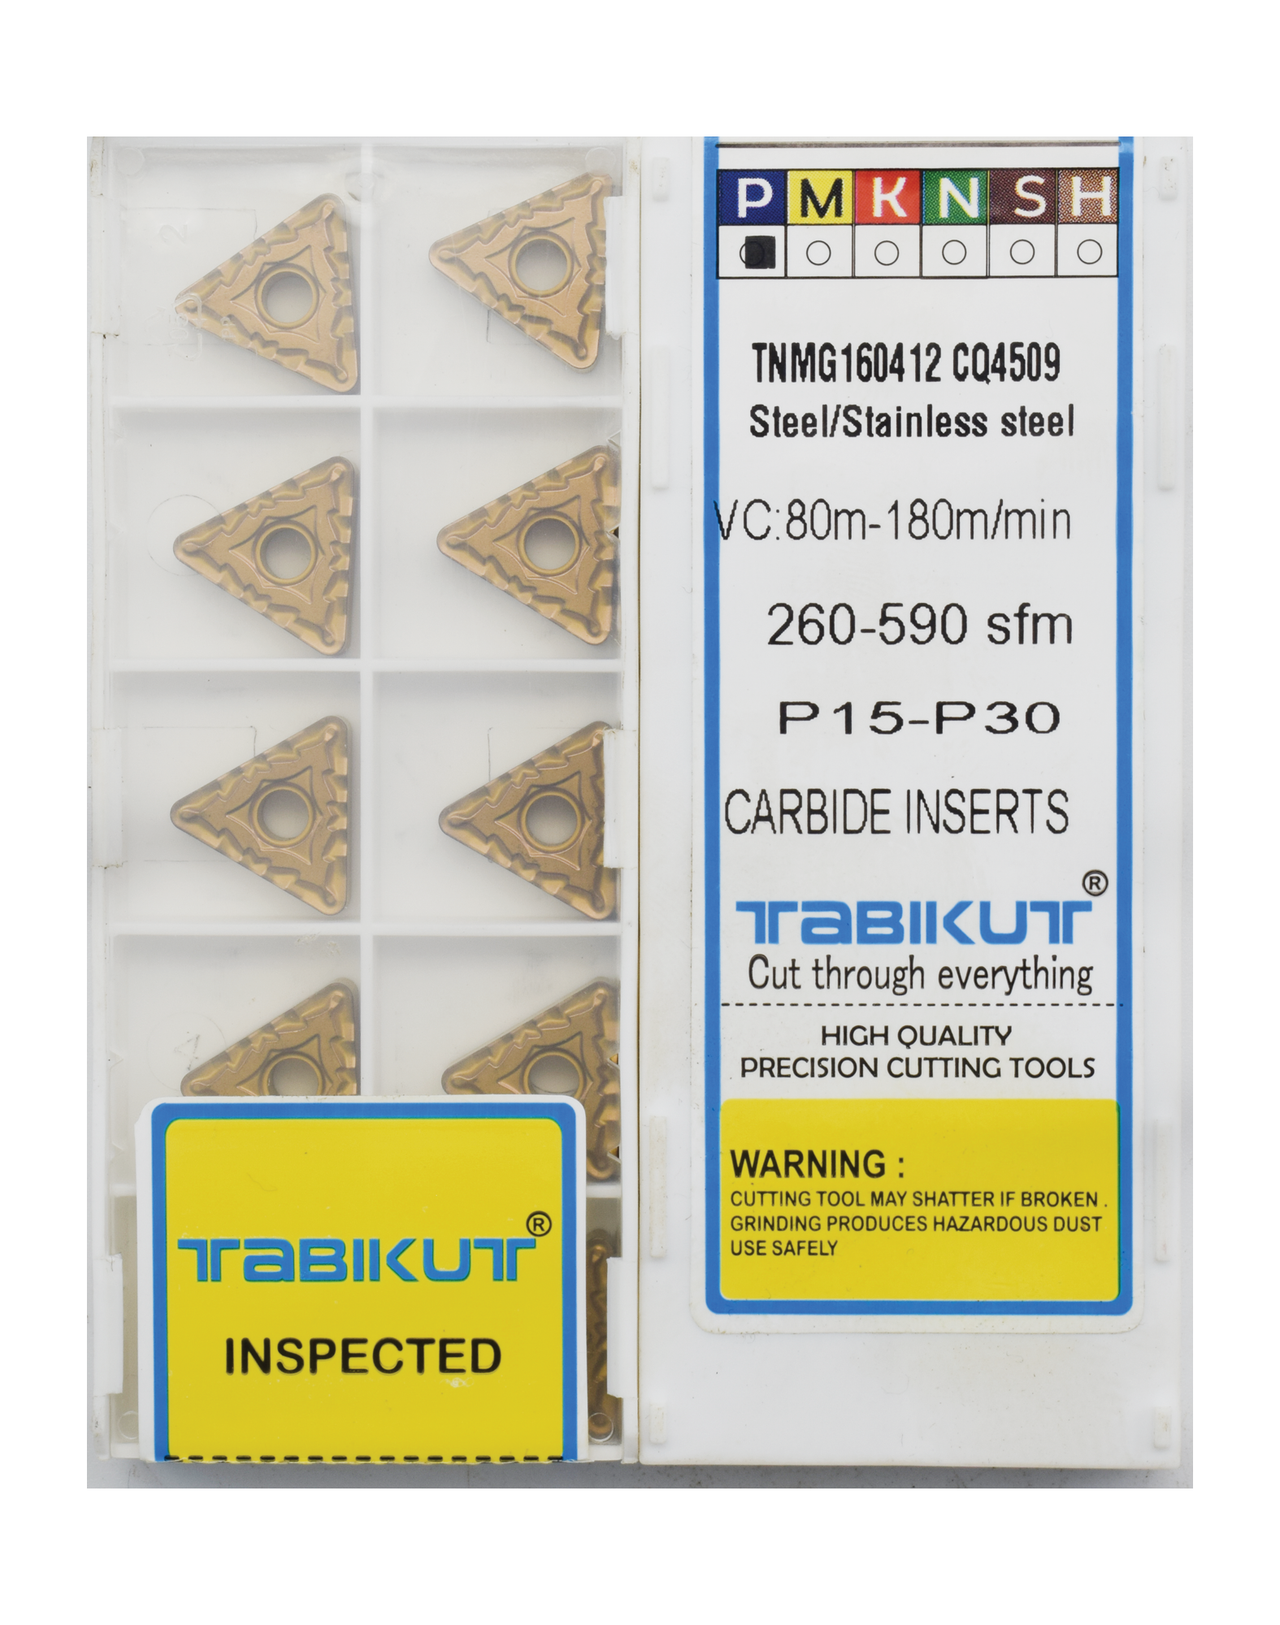 TNMG160404/08/12 CQ 4509 Chipbreaker Insert Steel Grade Of Tabikut Pack Of 10